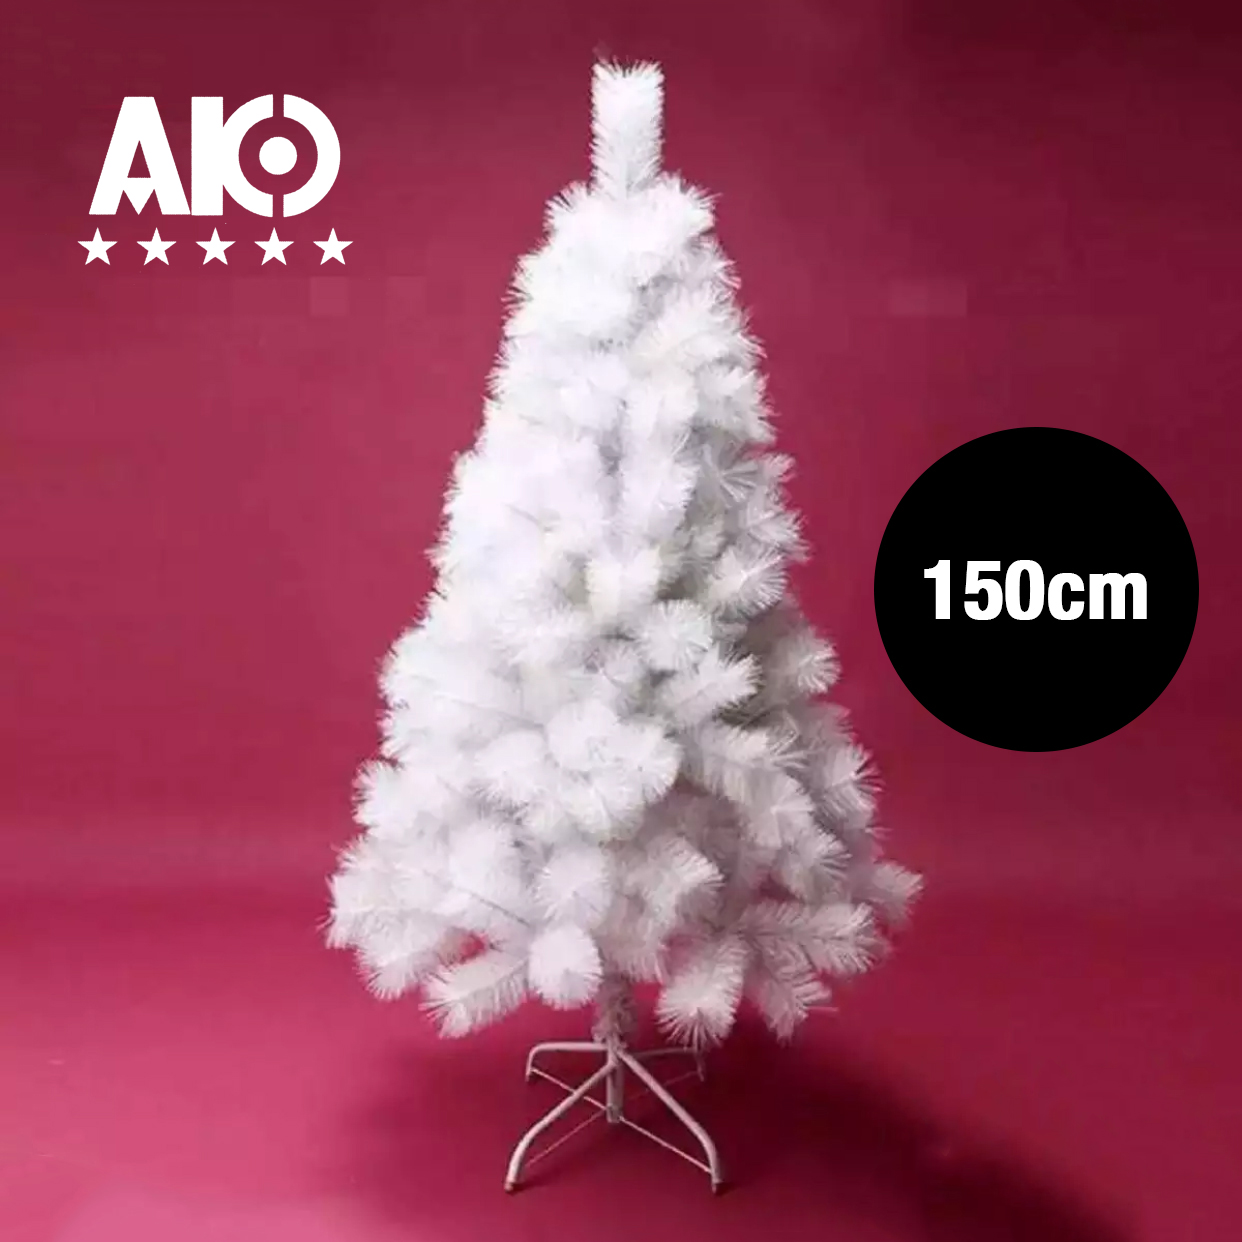 where can i buy a white christmas tree